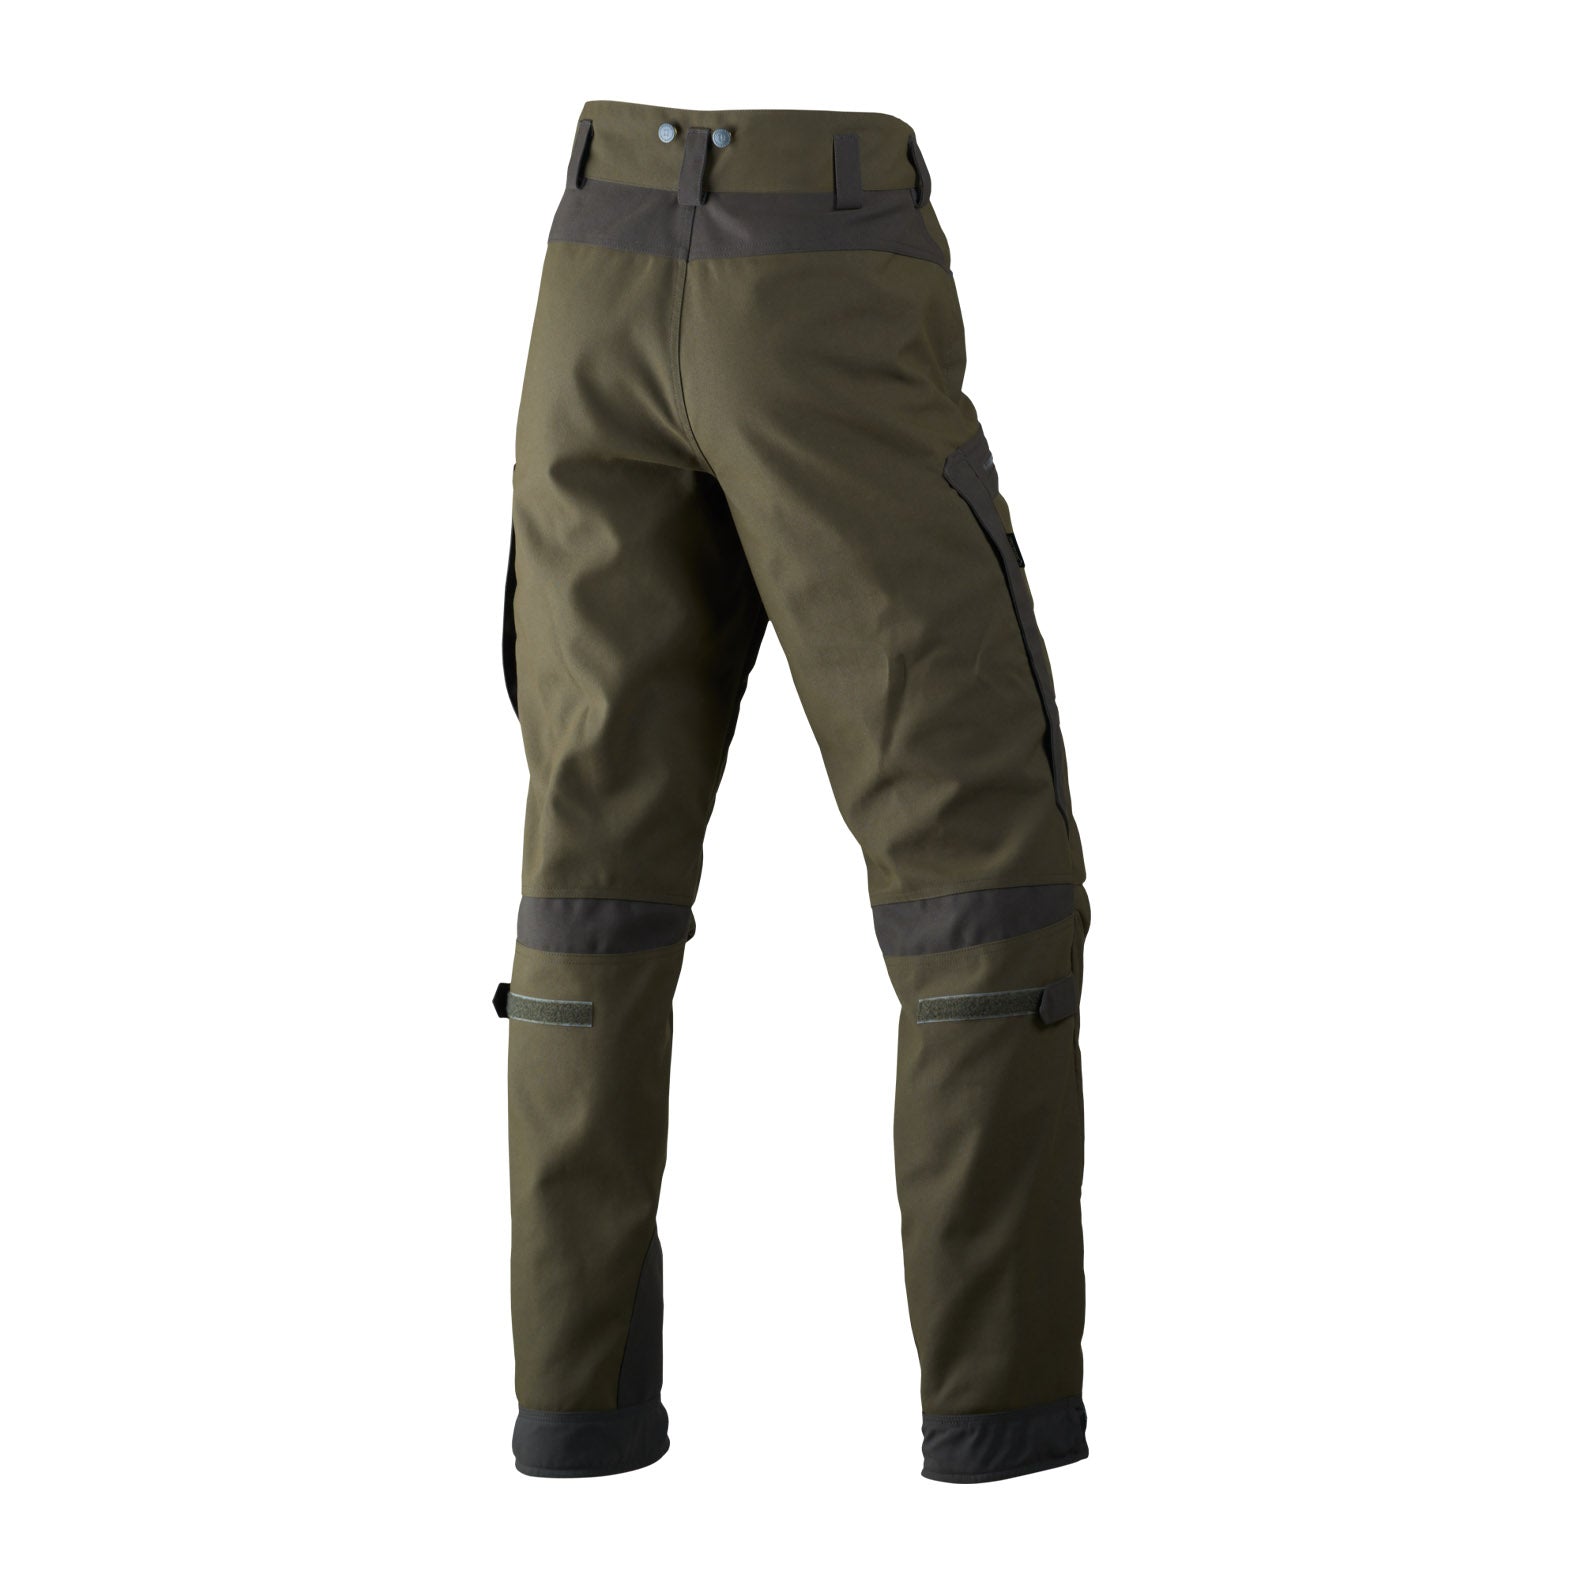 Härkila Metso Winter Trousers - Quiet Hunting Trousers for Winter - Lined  Sit Trousers Men with Cartridge Pocket, Green : Amazon.de